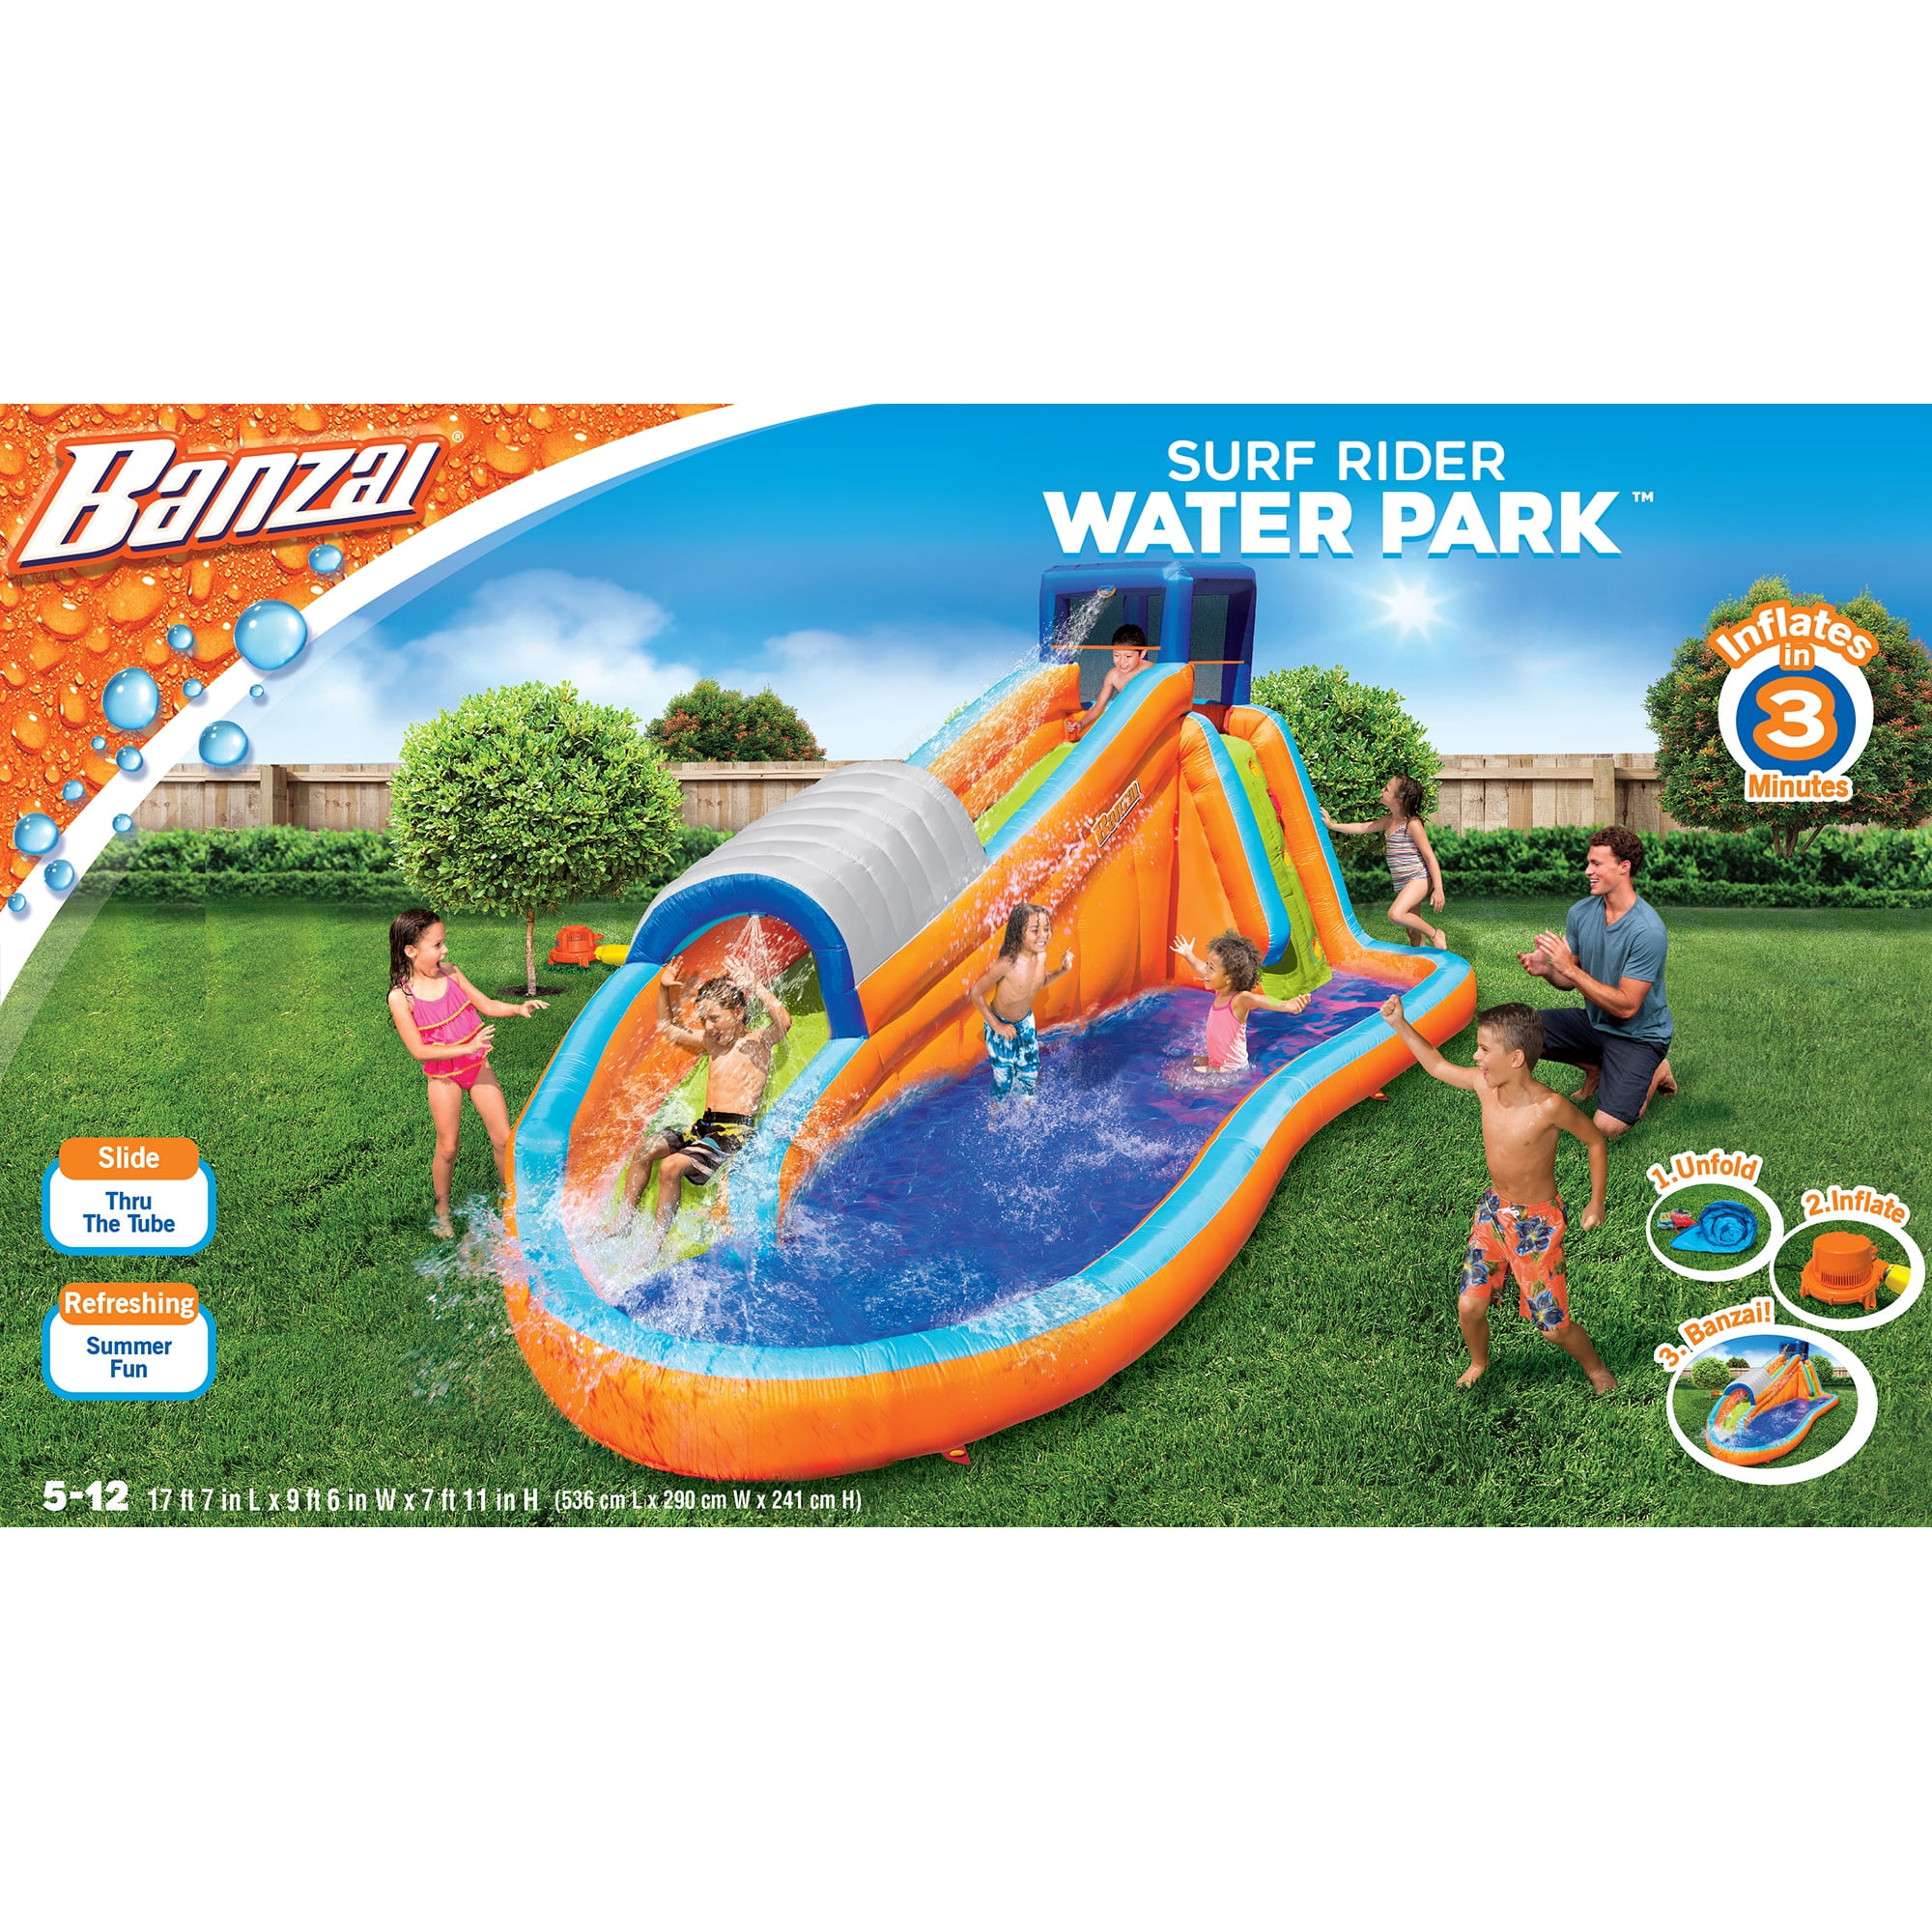 BANZAI Inflatable Safari Splash Water Park, Length: 14 Ft, Width